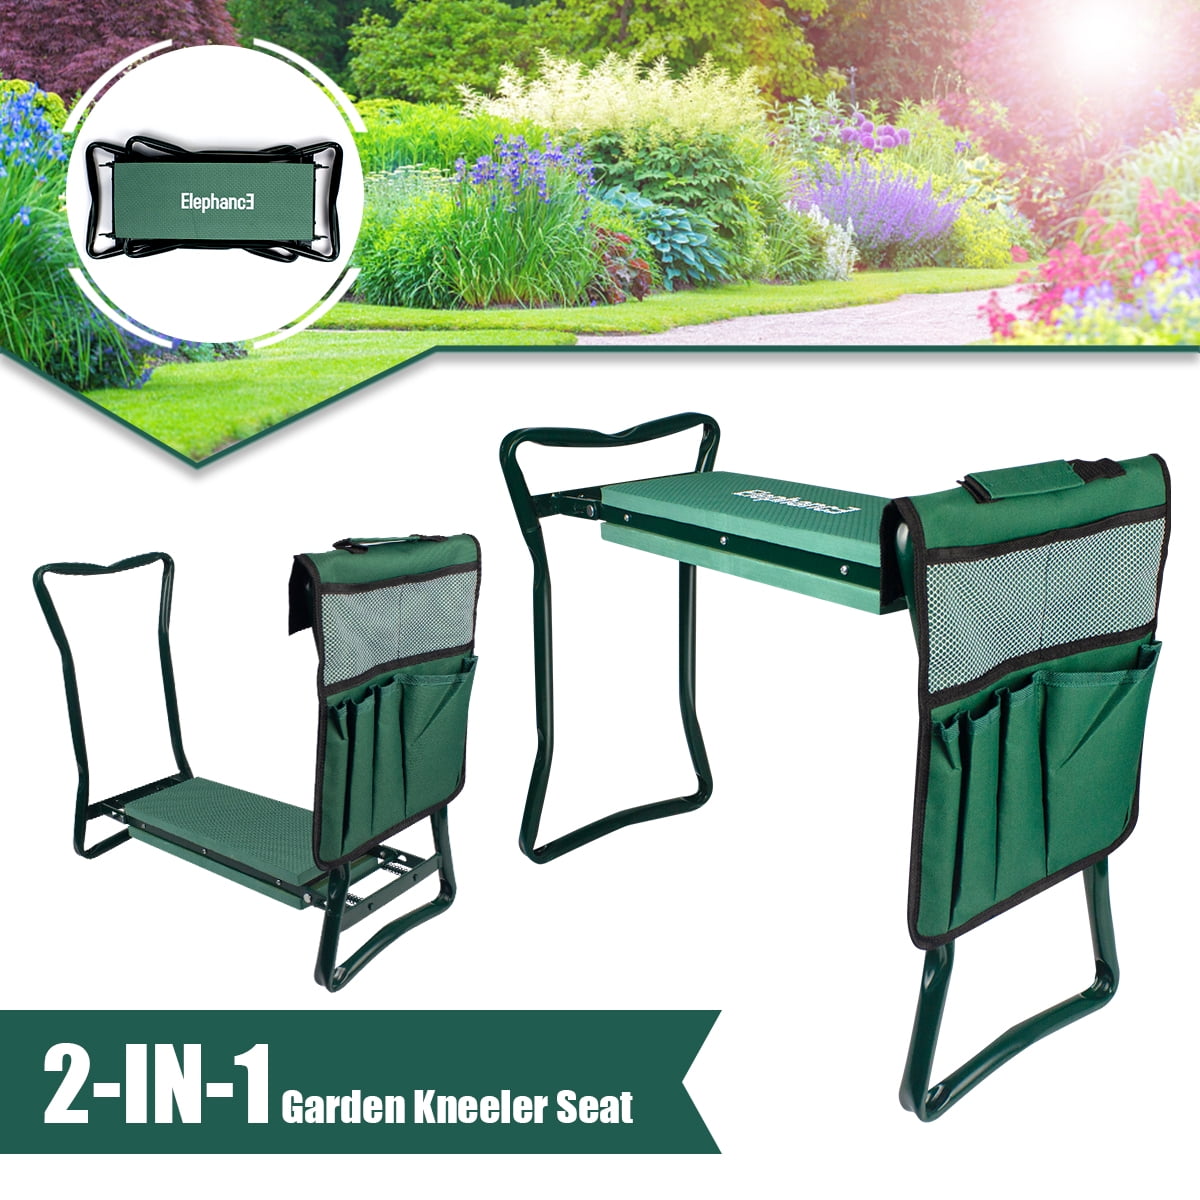 Green Garden Foldable Kneeler Kneeling Bench Stool Cushion Seat Pad Tool Pouch 